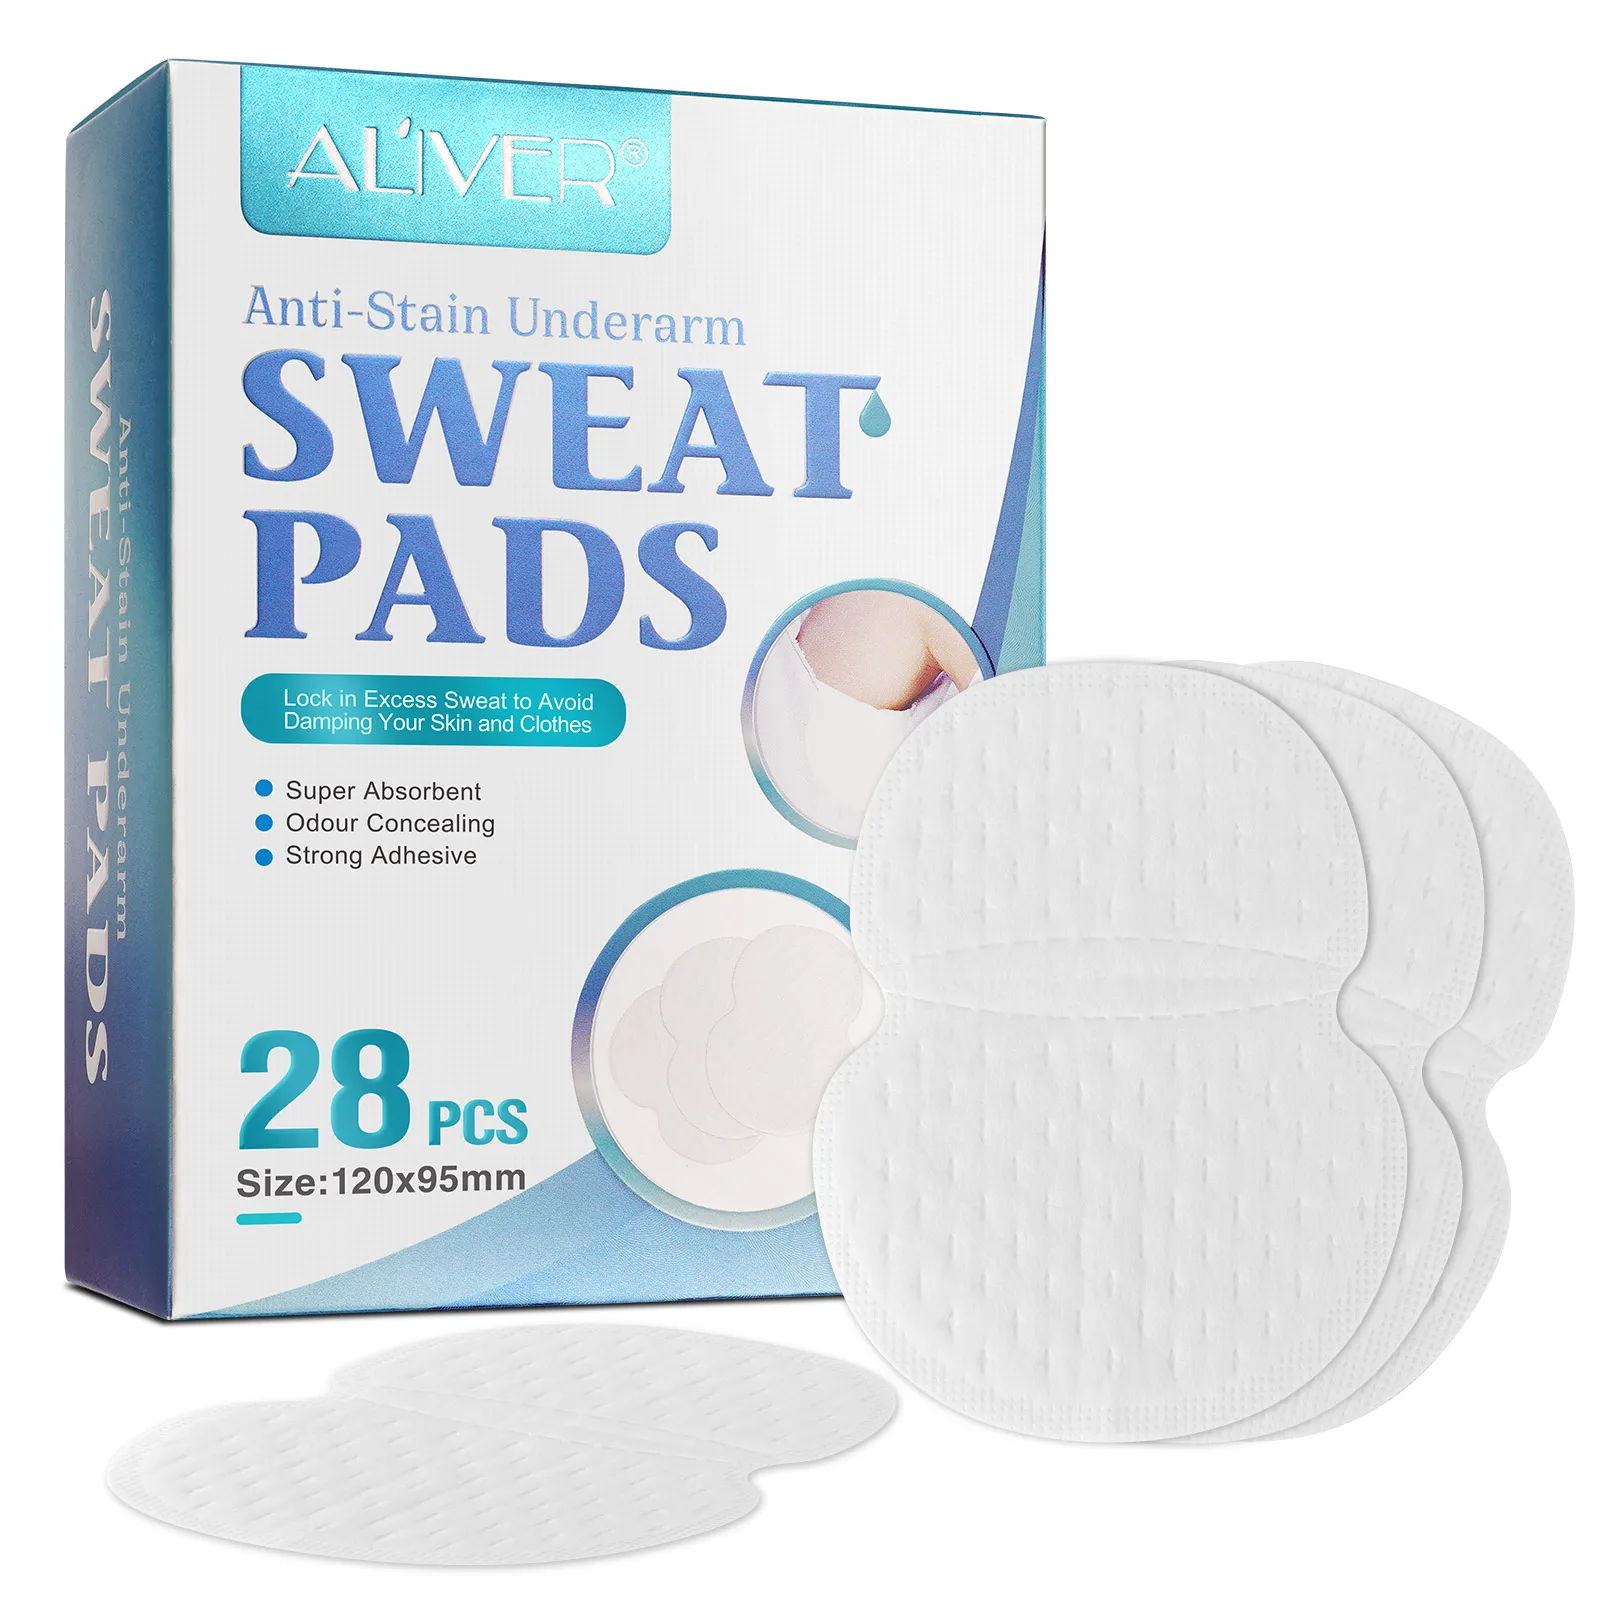 

ALIVER Private Label Disposable Armpit Super Absorbent Cotton pads Underarm Sweat Pads